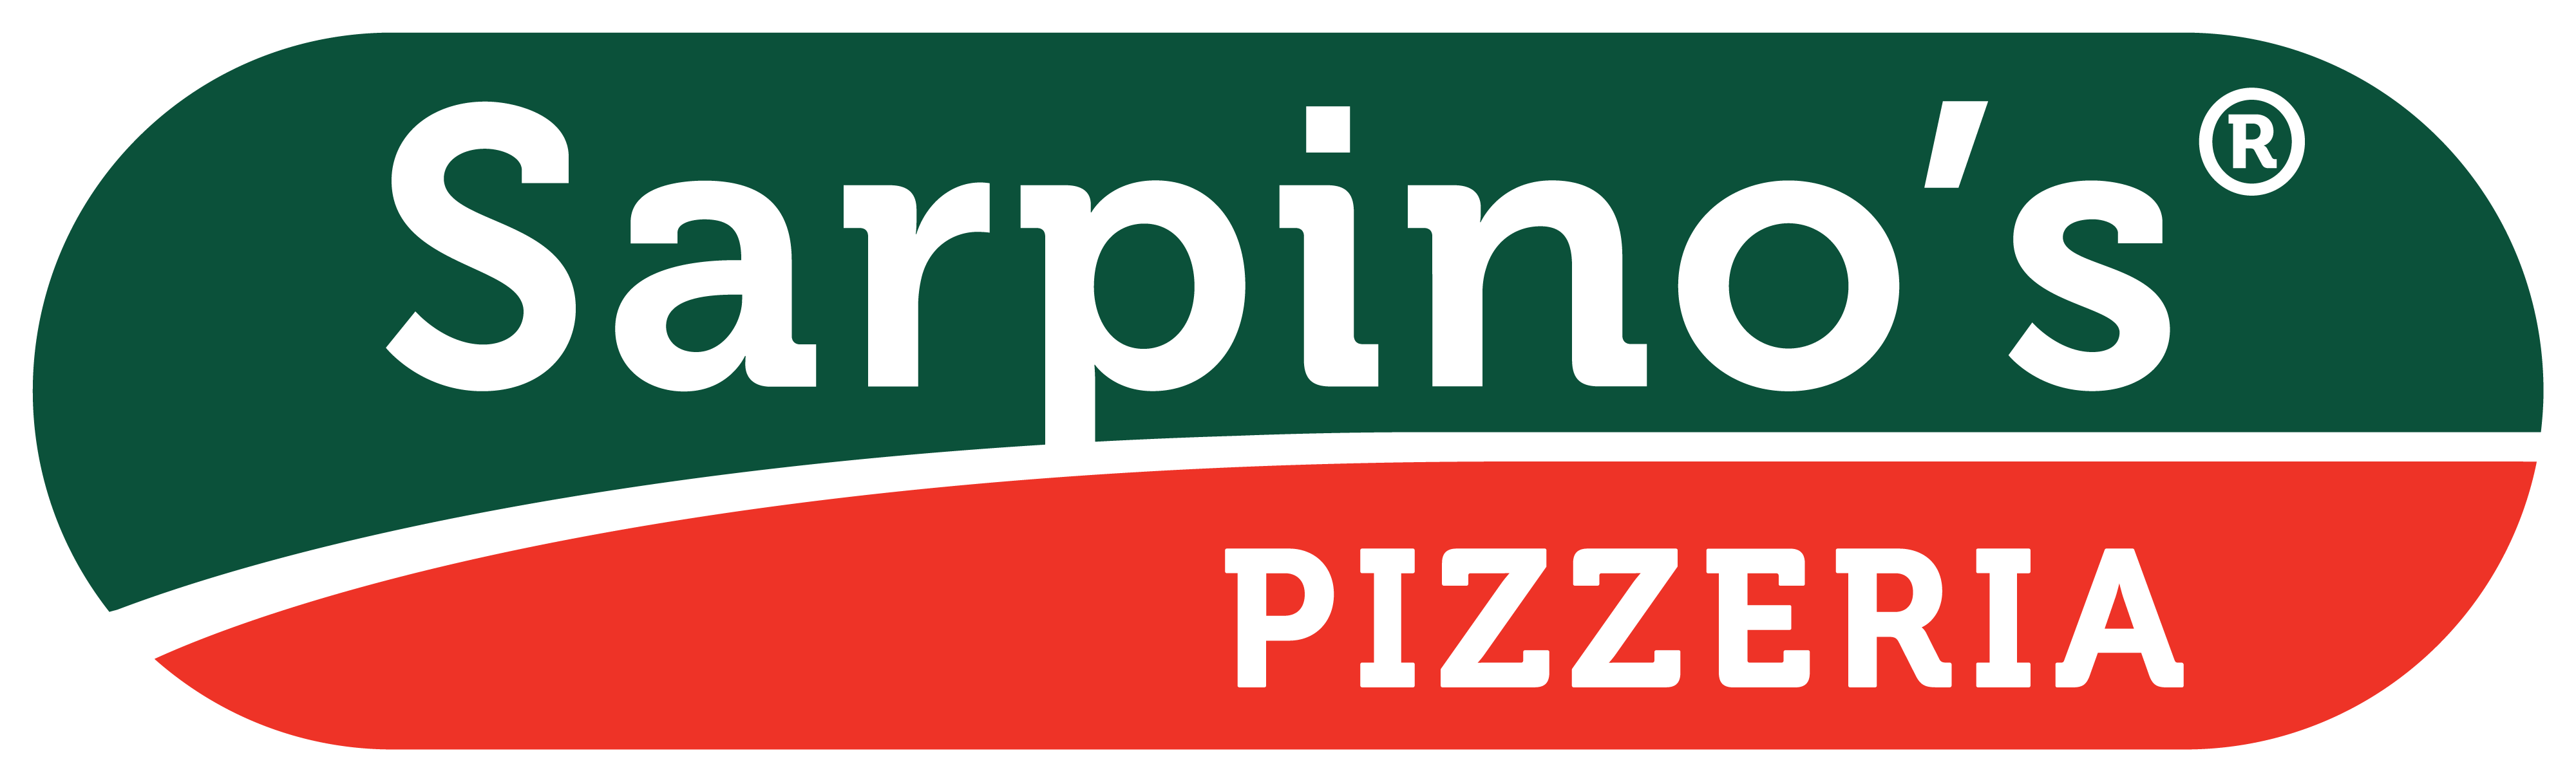 Sarpino's Pizzeria